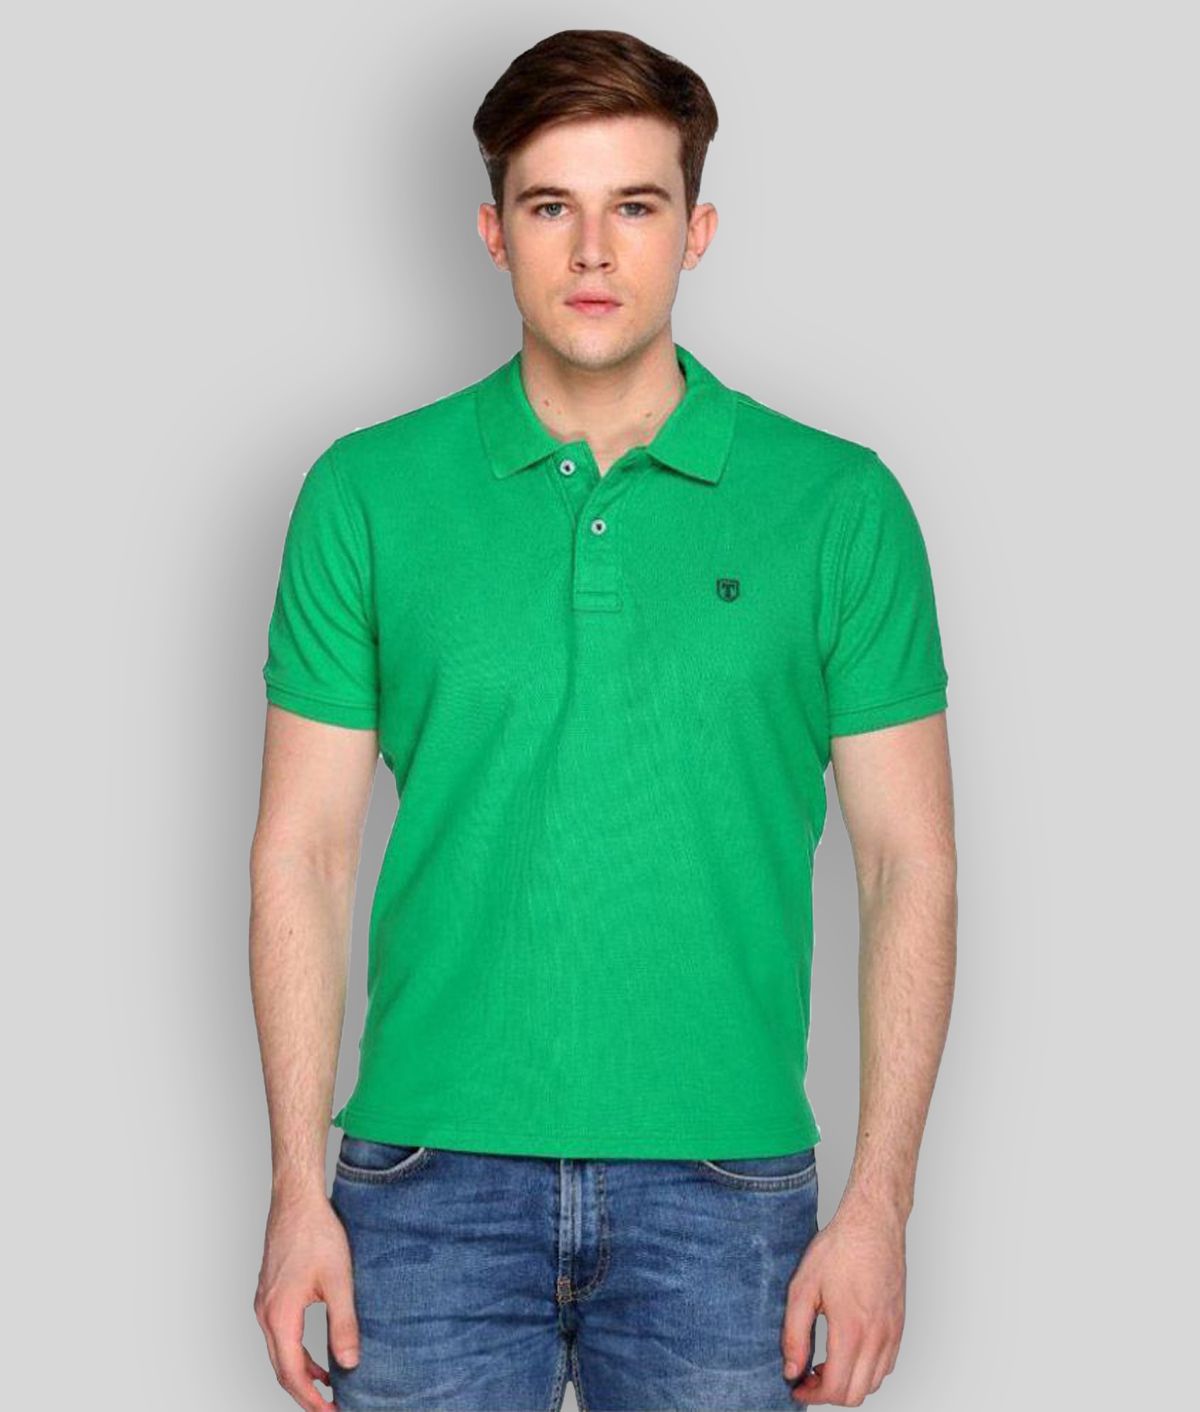 Trufit - Green Cotton Blend Regular Fit Men's Polo T shirt ( Pack of 1 )